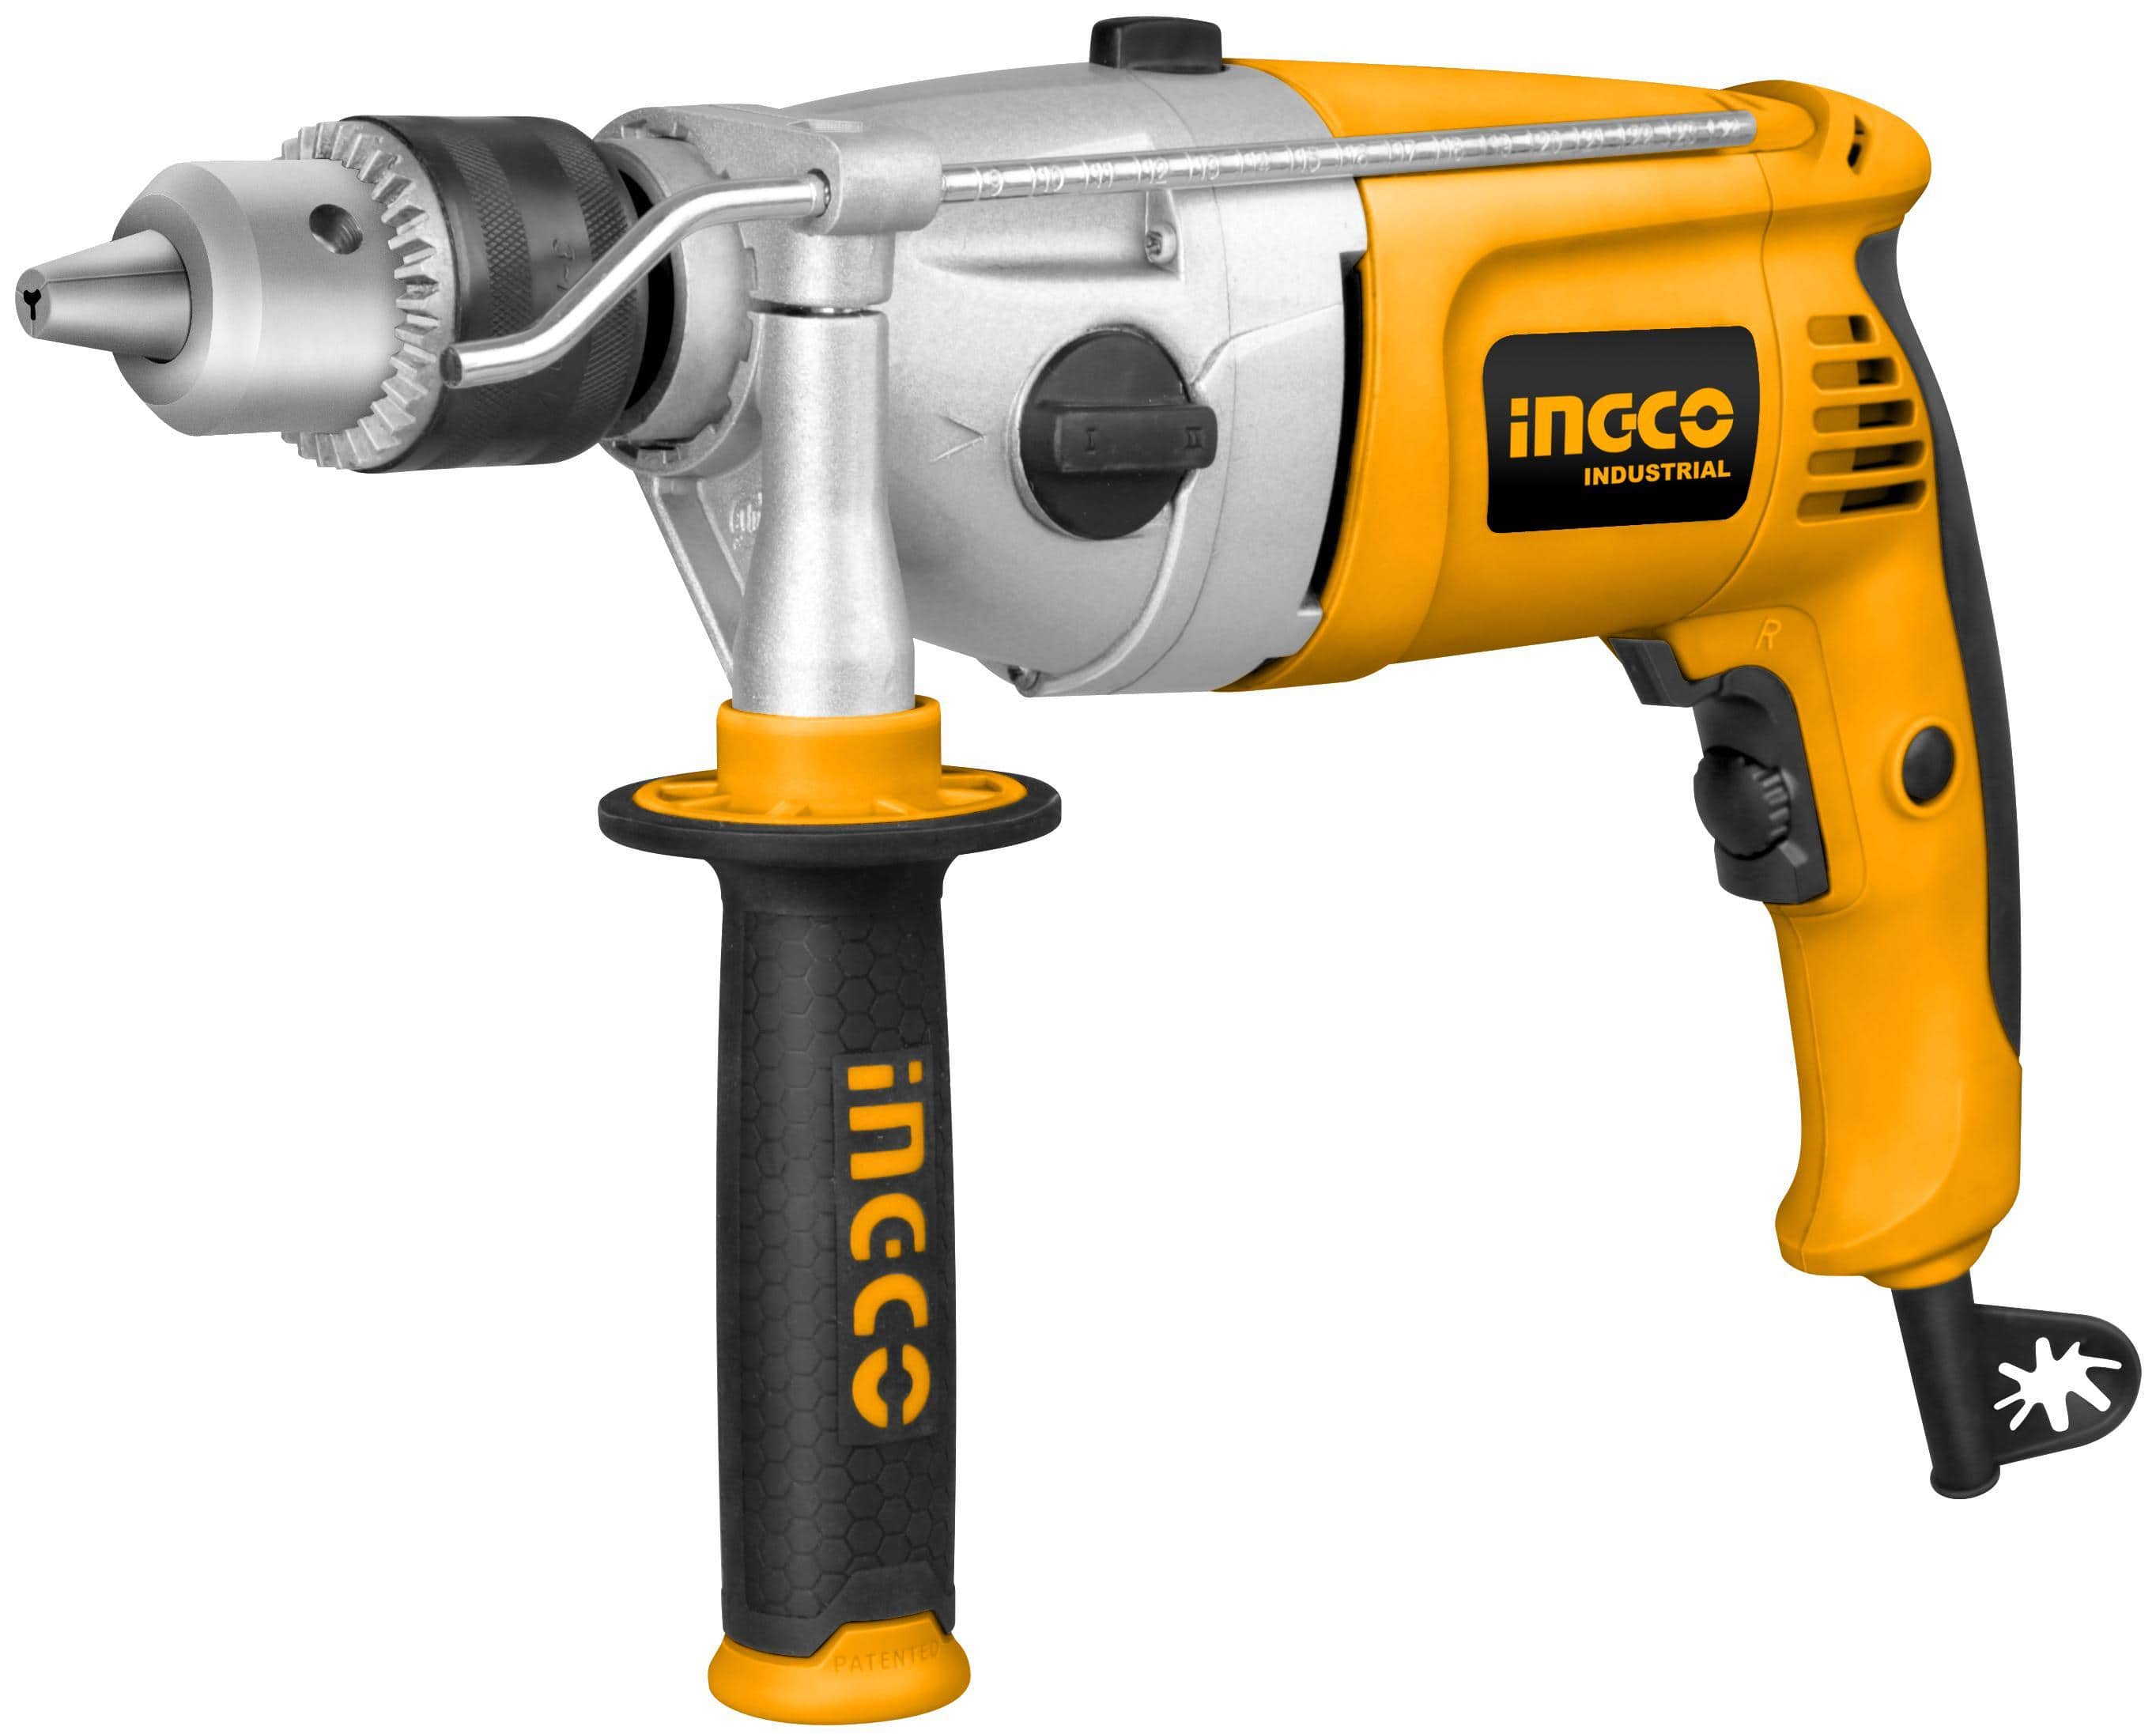 Ingco Hammer Impact drill 16mm 1100W - ID211002 | Supply Master | Accra, Ghana Tools Building Steel Engineering Hardware tool